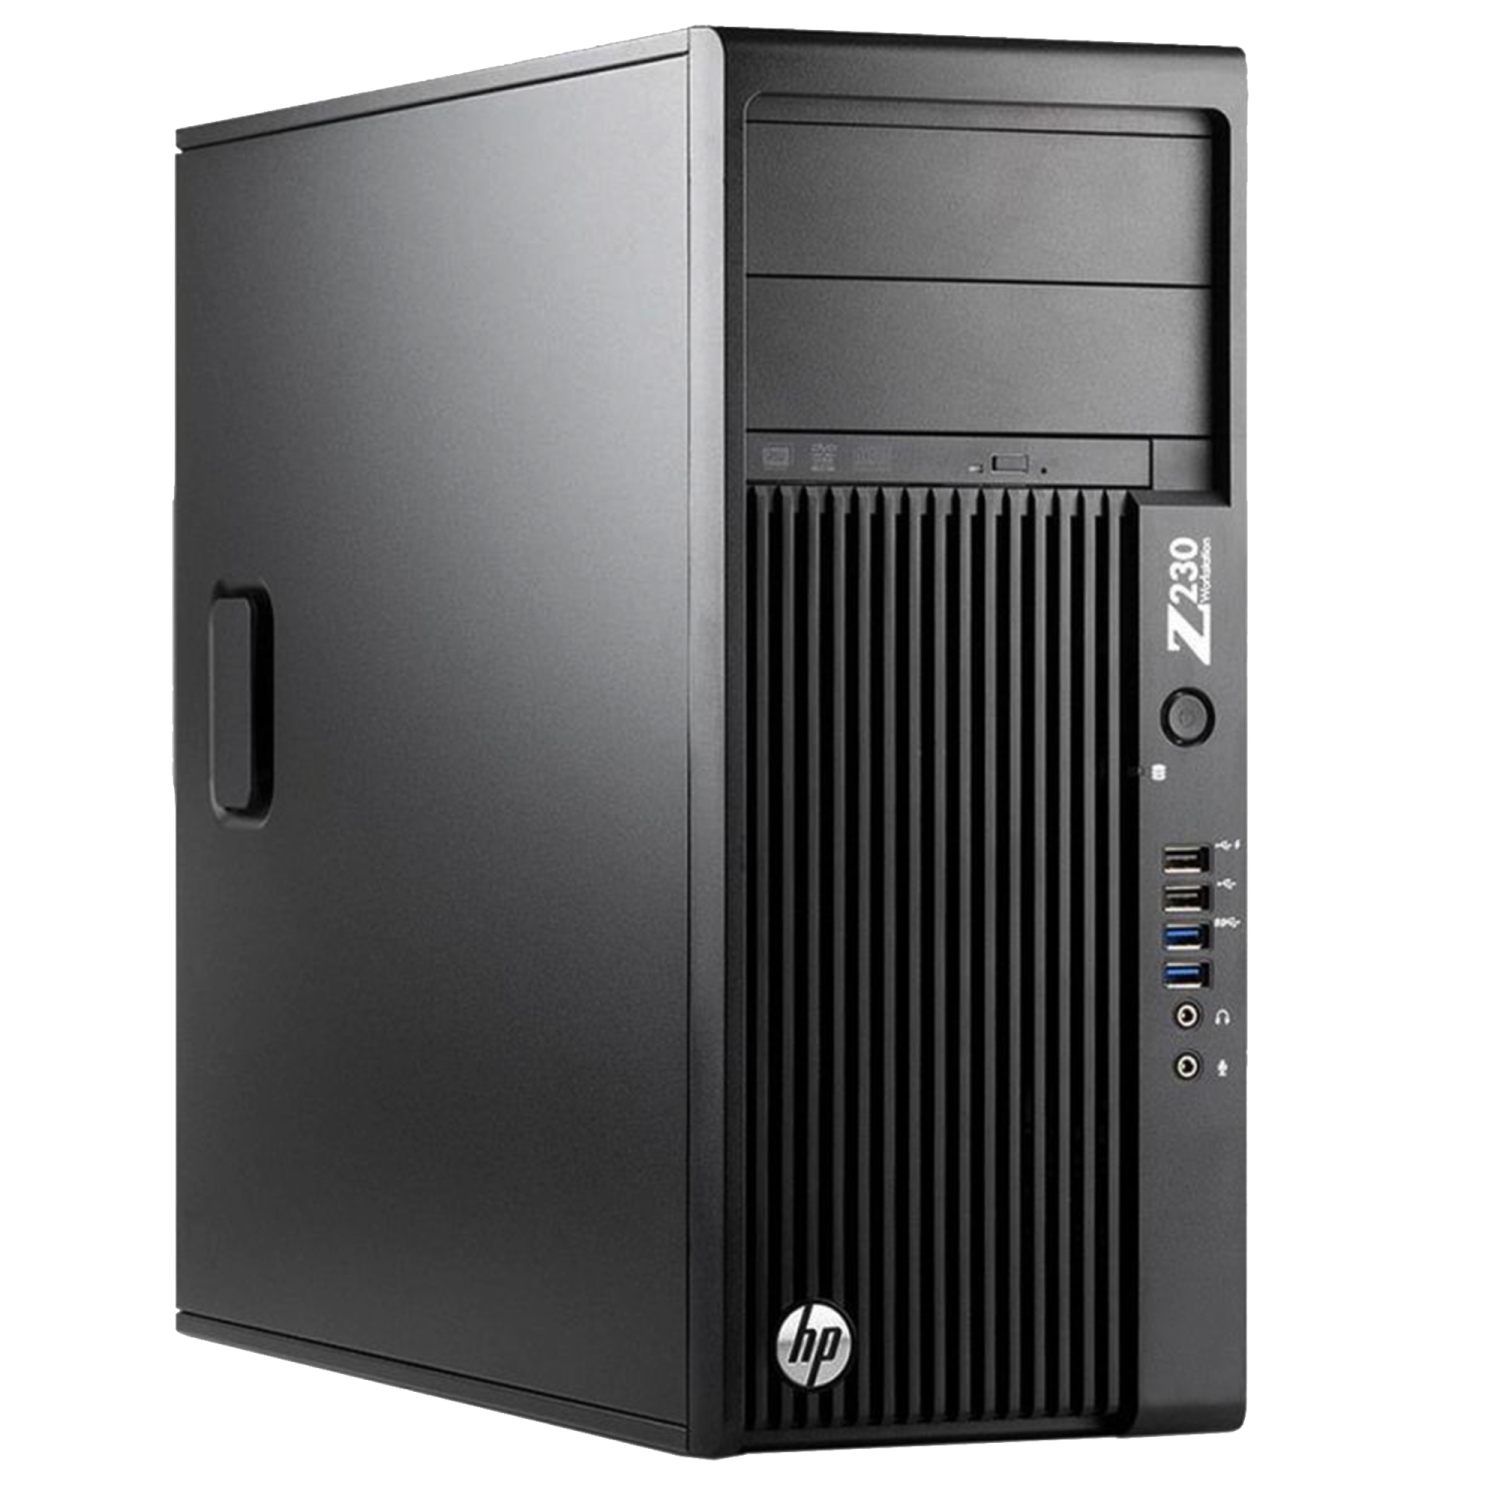 Refurbished (Good) - HP Z230 Tower Workstation Desktop PC Computer (Core i5/ 16GB RAM/ 256GB SSD/ WINDOWS 10 PRO) Intel - Black